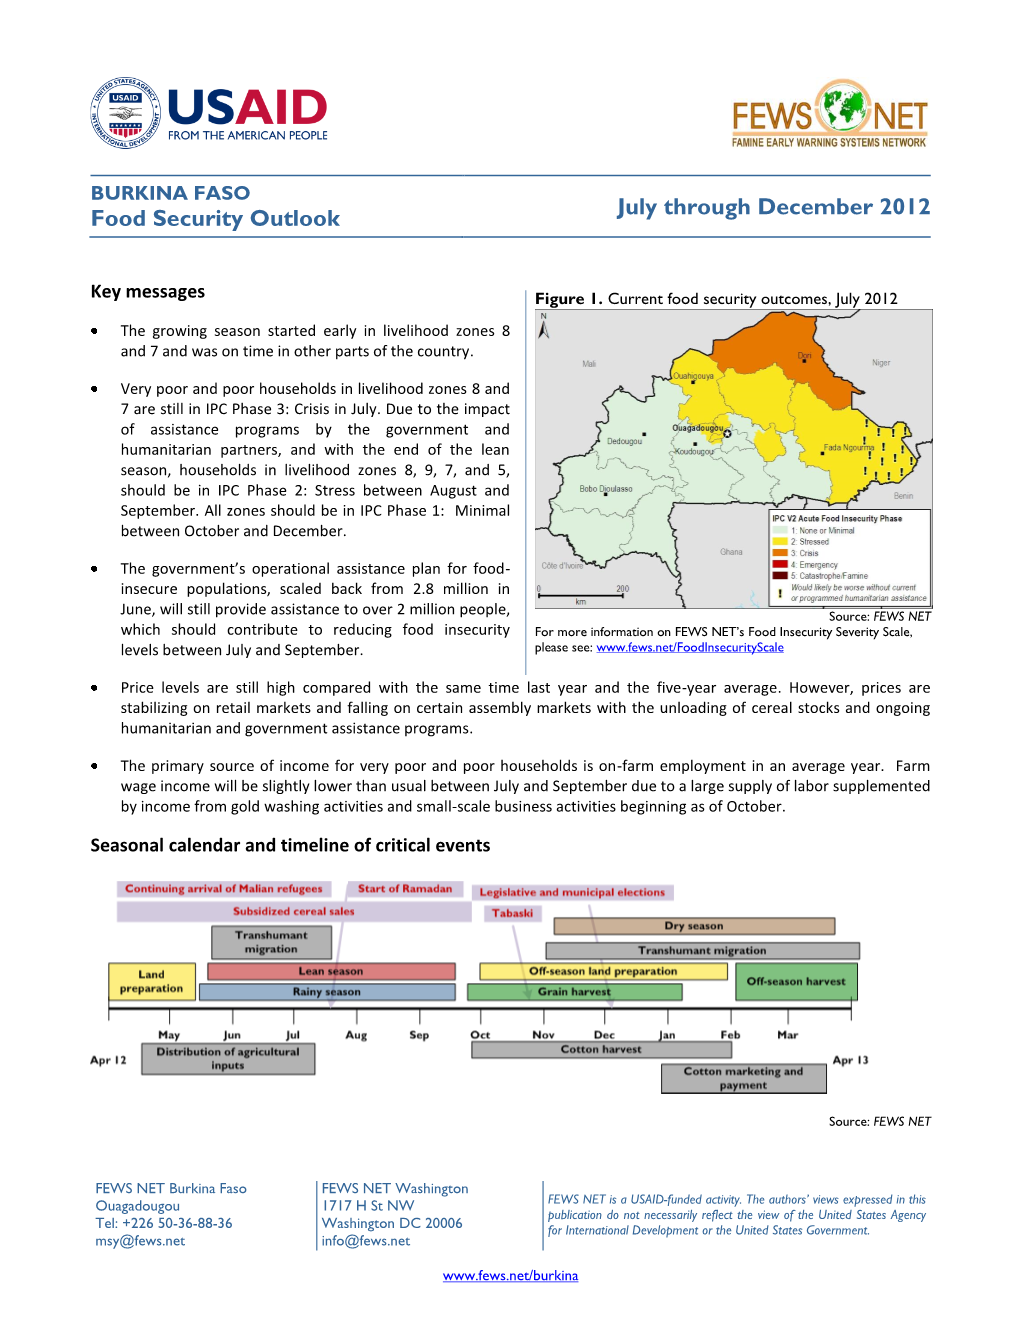 BURKINA FASO Food Security Outlook July Through December 2012